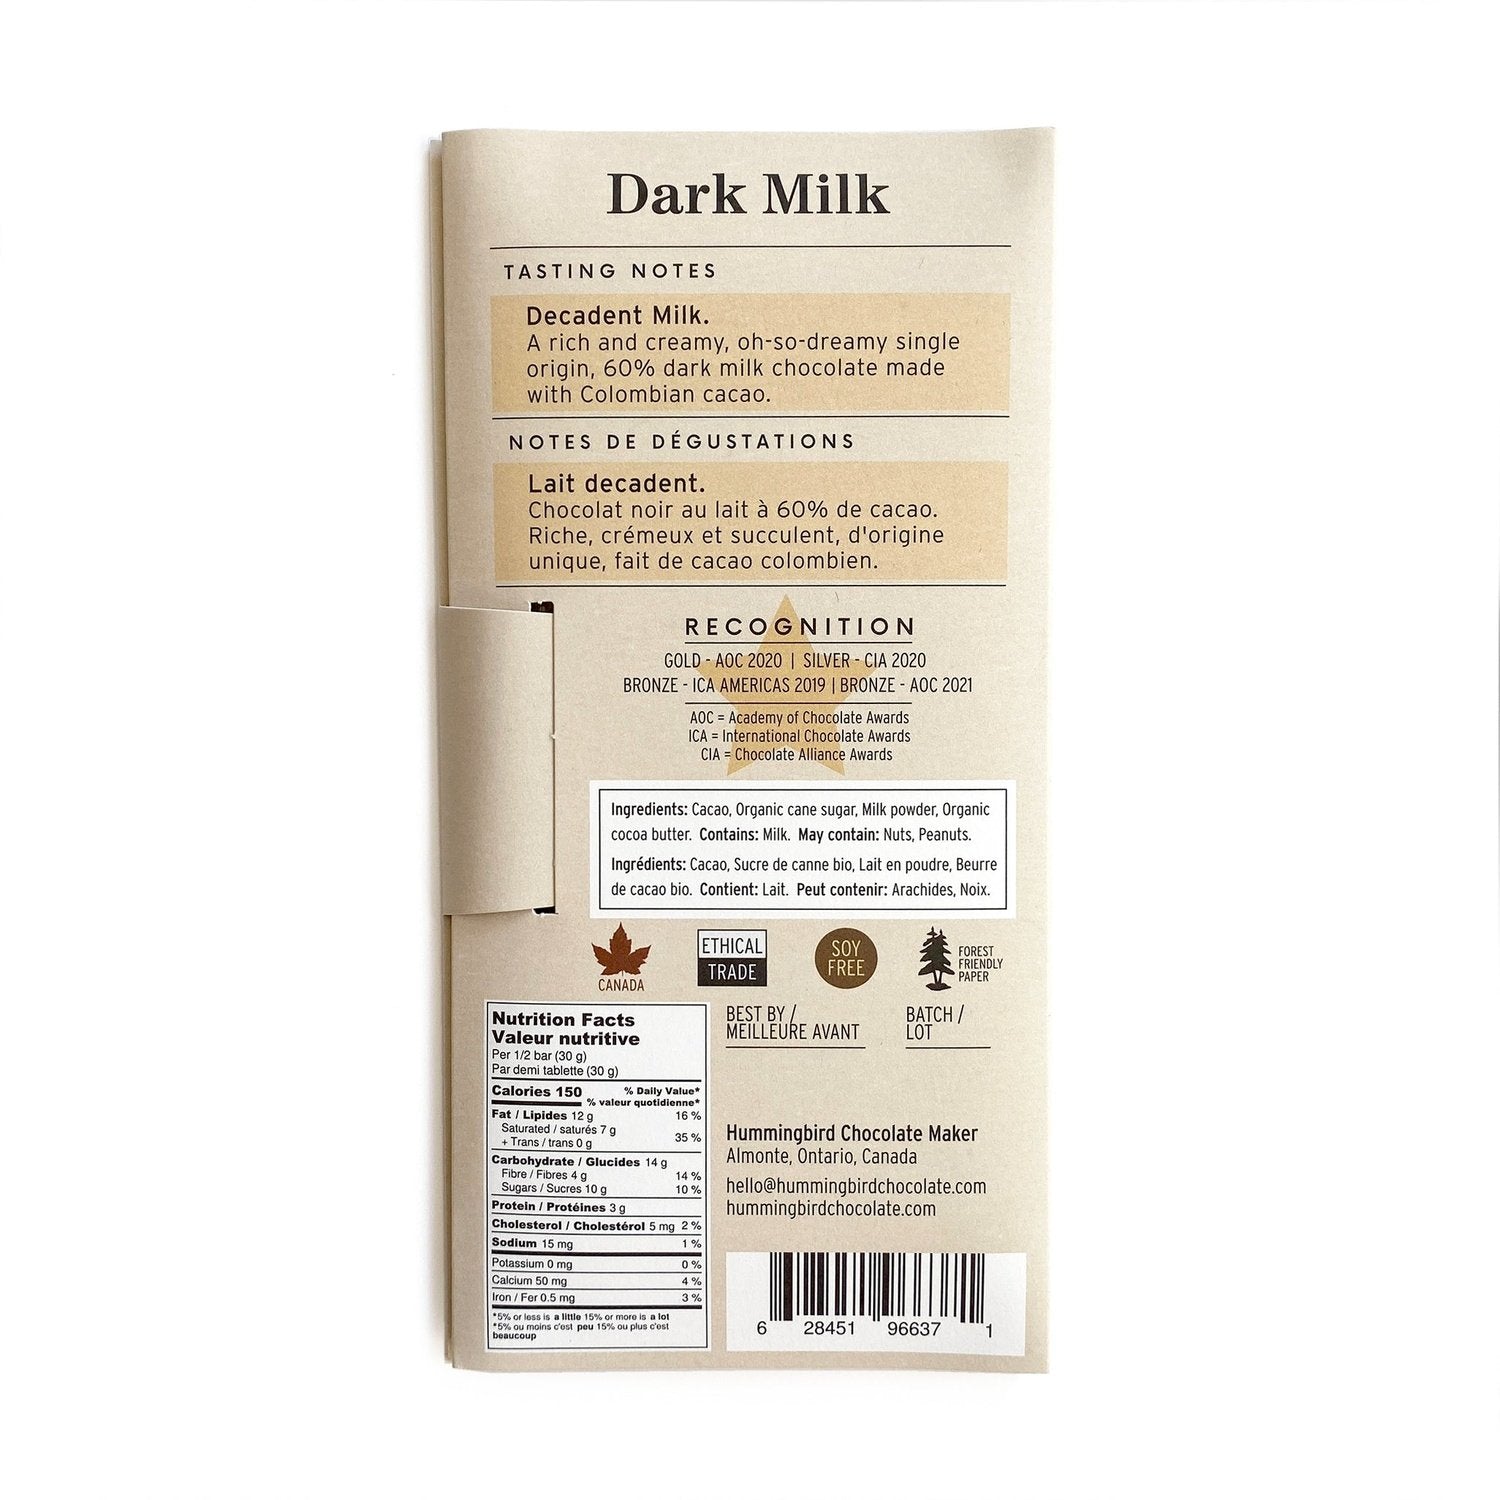 Hummingbird Chocolate Maker - Dark Milk bar, Milk Chocolate - back of package